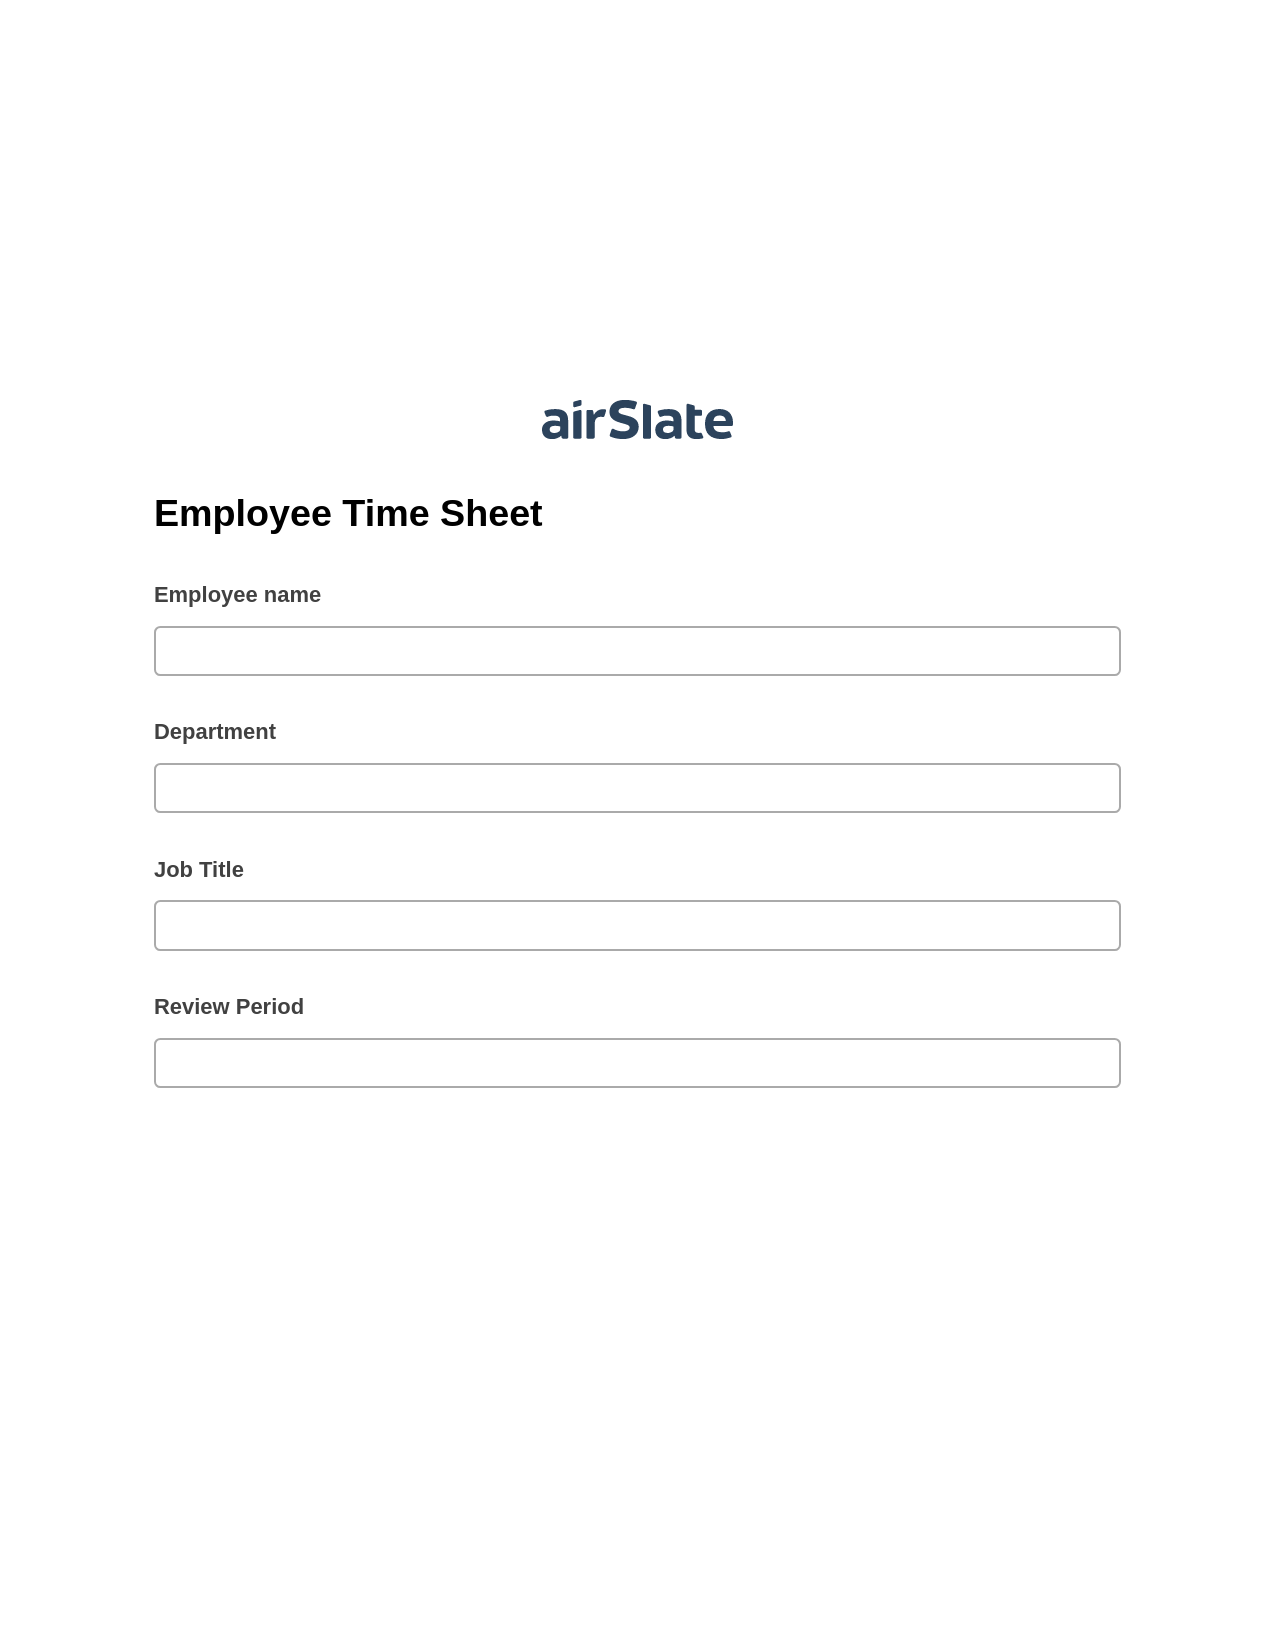 Multirole Employee Time Sheet Pre-fill Document Bot, Webhook Bot, Archive to Google Drive Bot